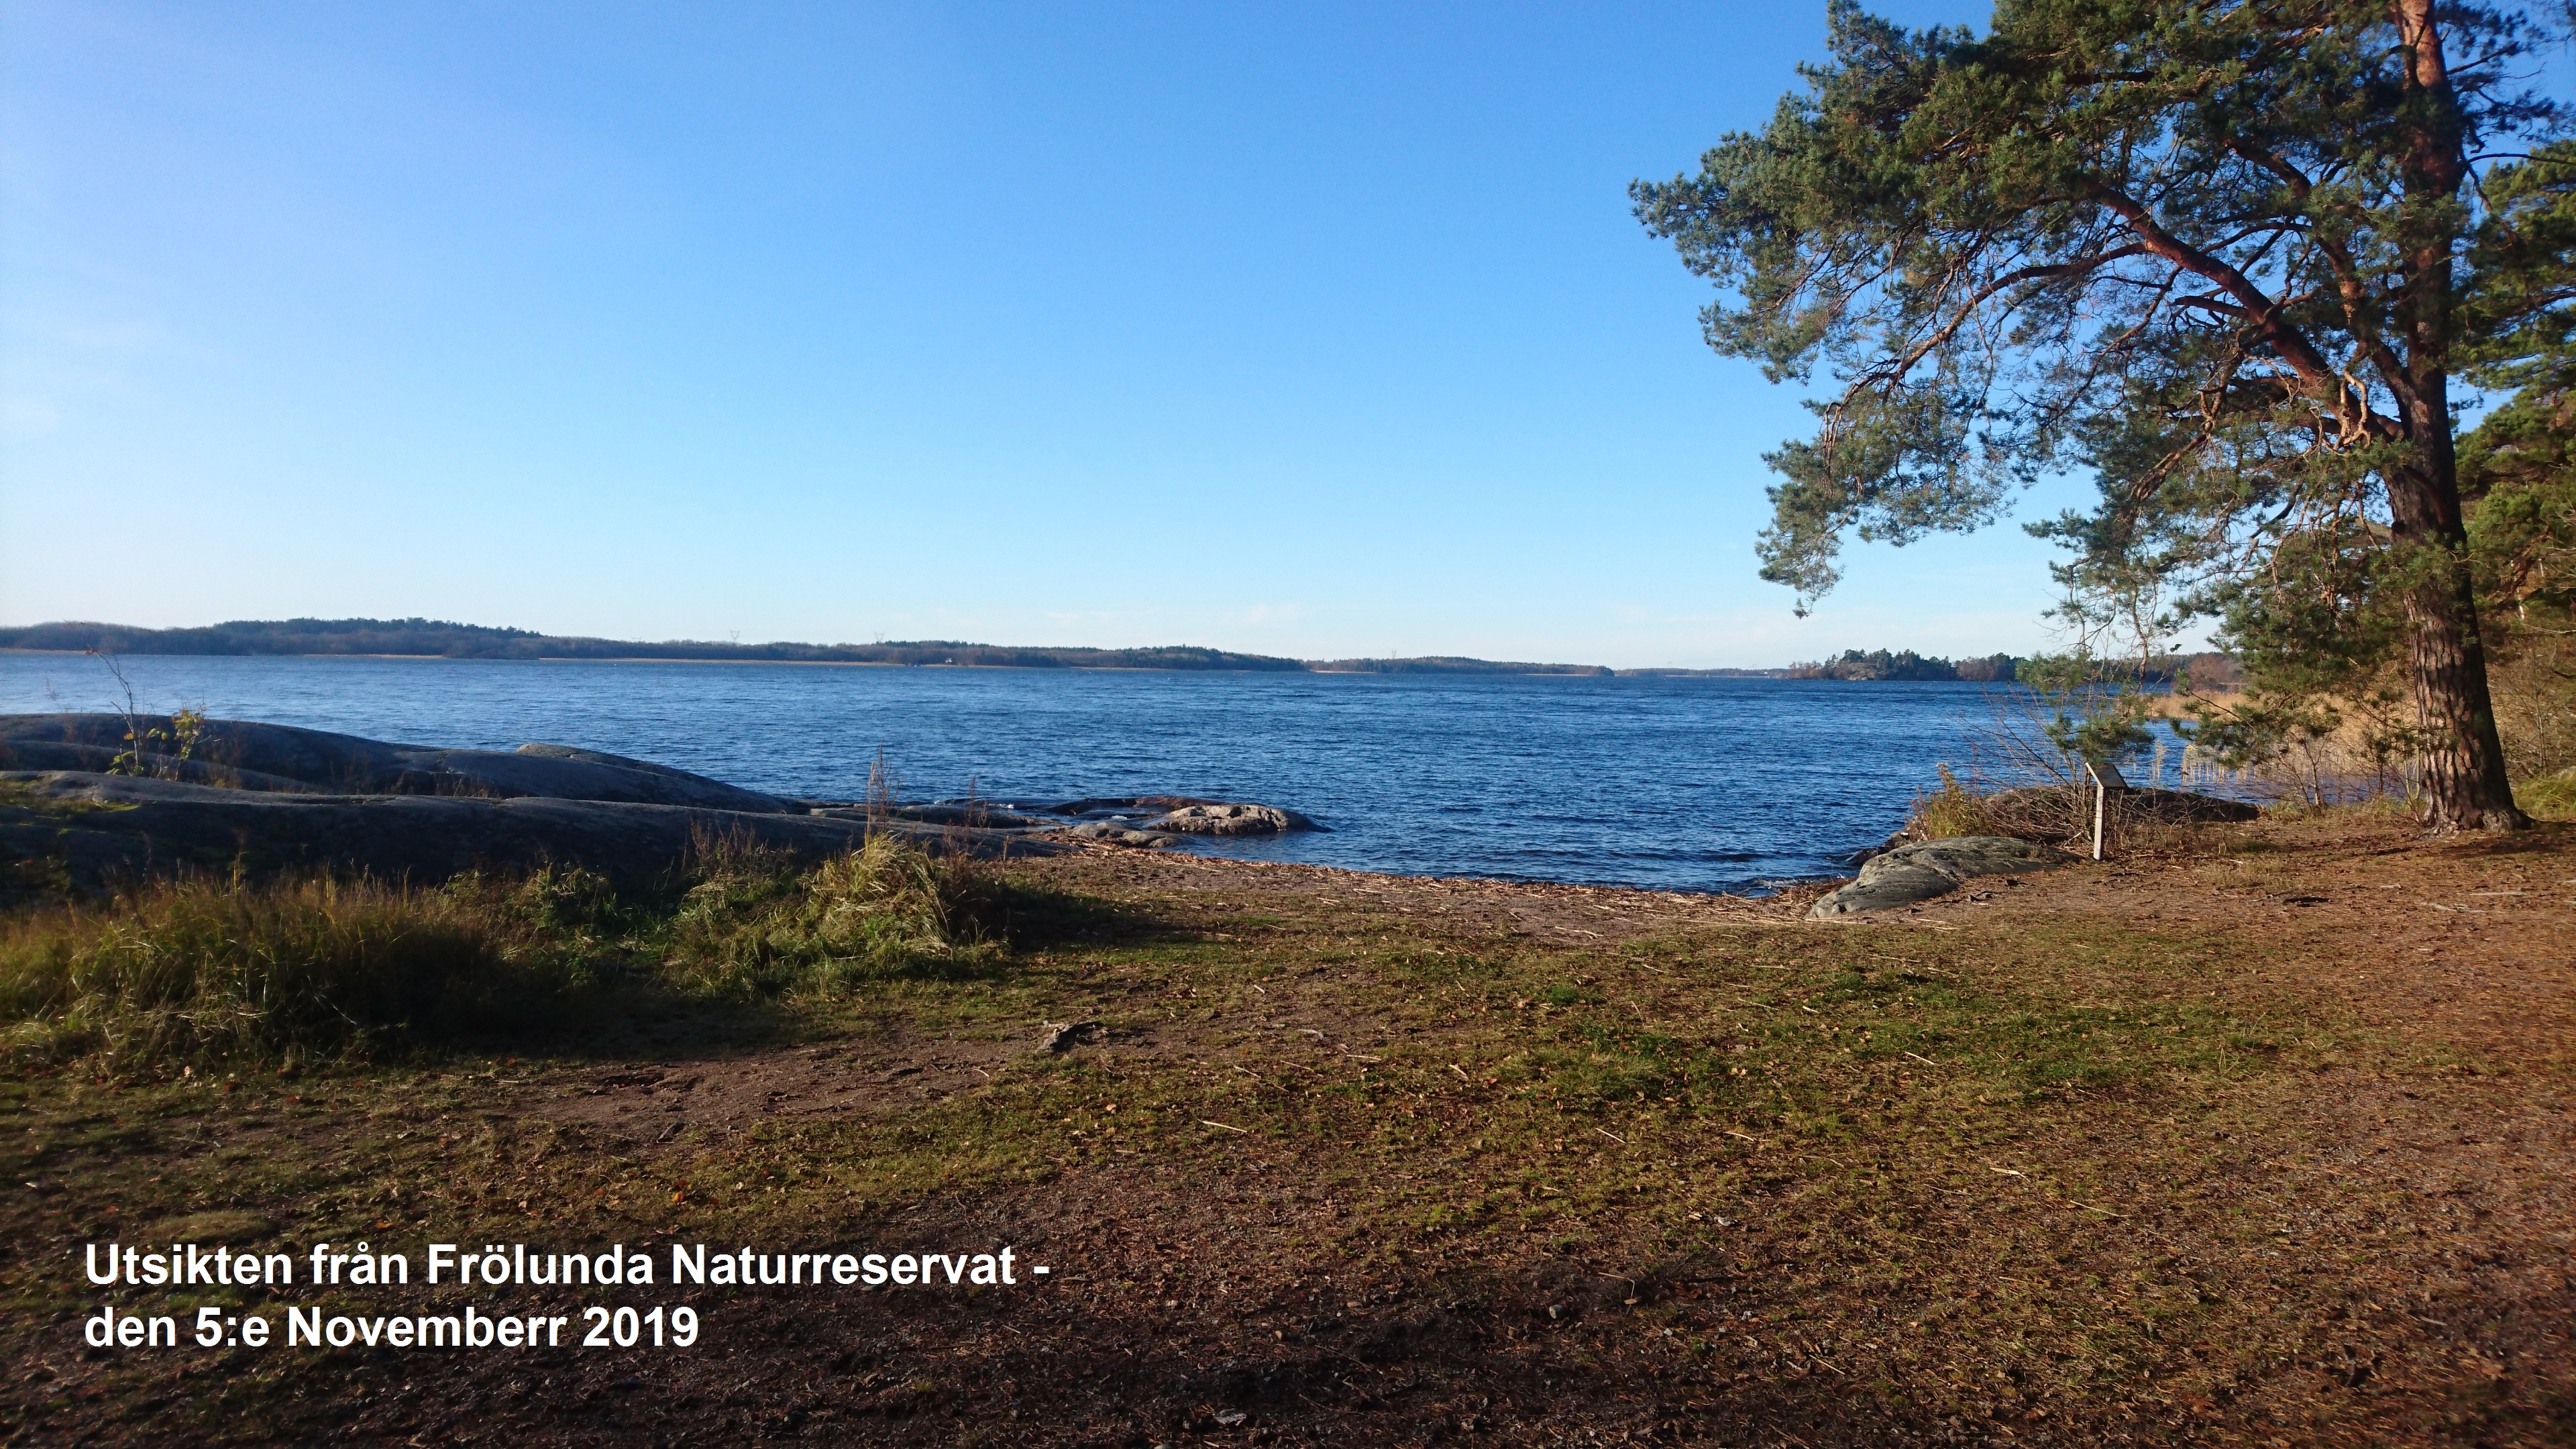 Frölunda naturreservat - Utsikt 5:e November